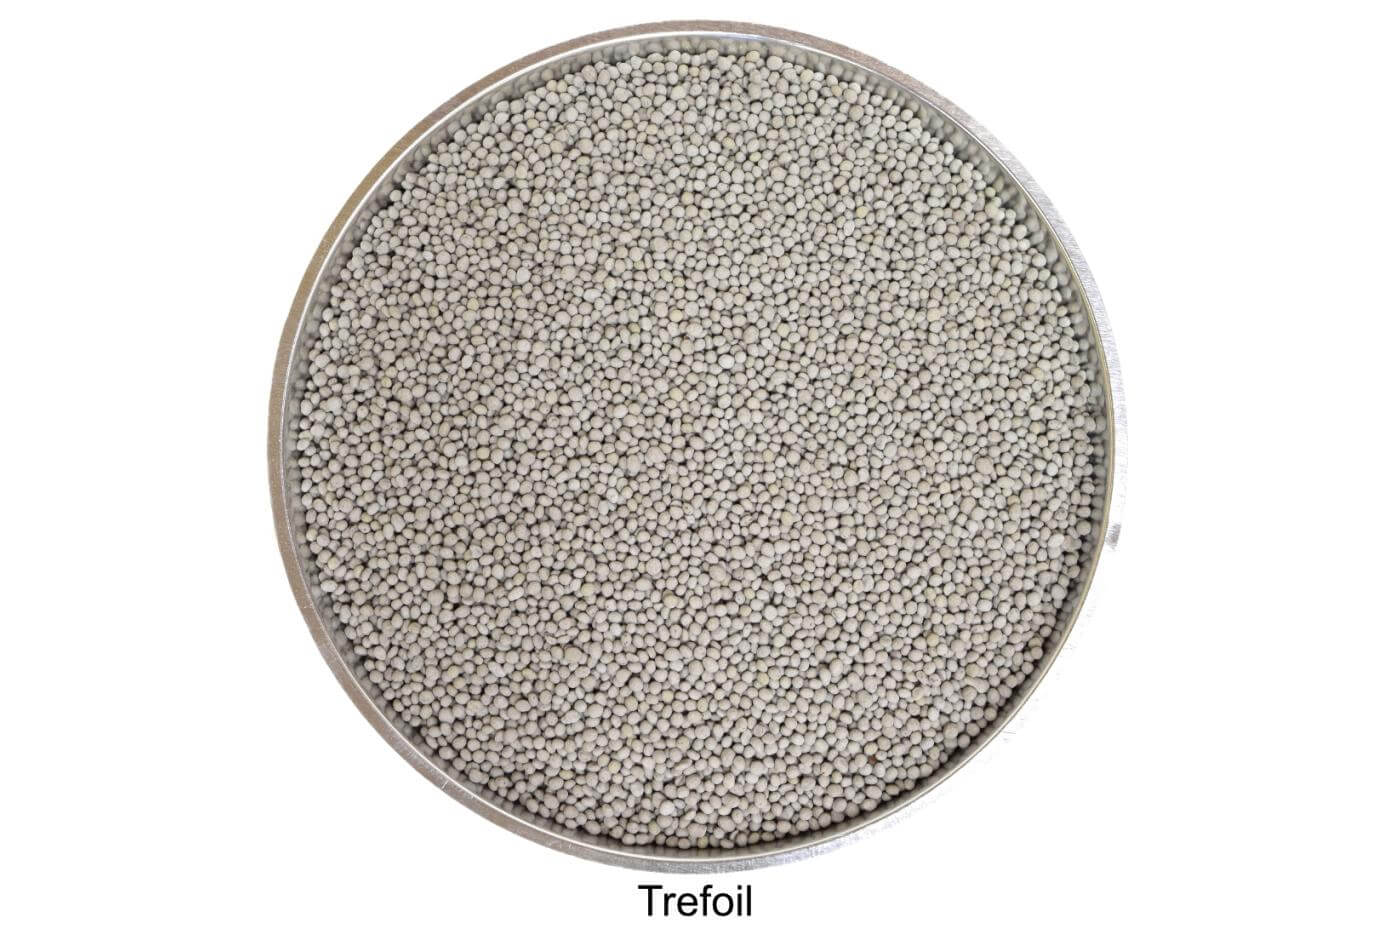 coated Trefoil seeds